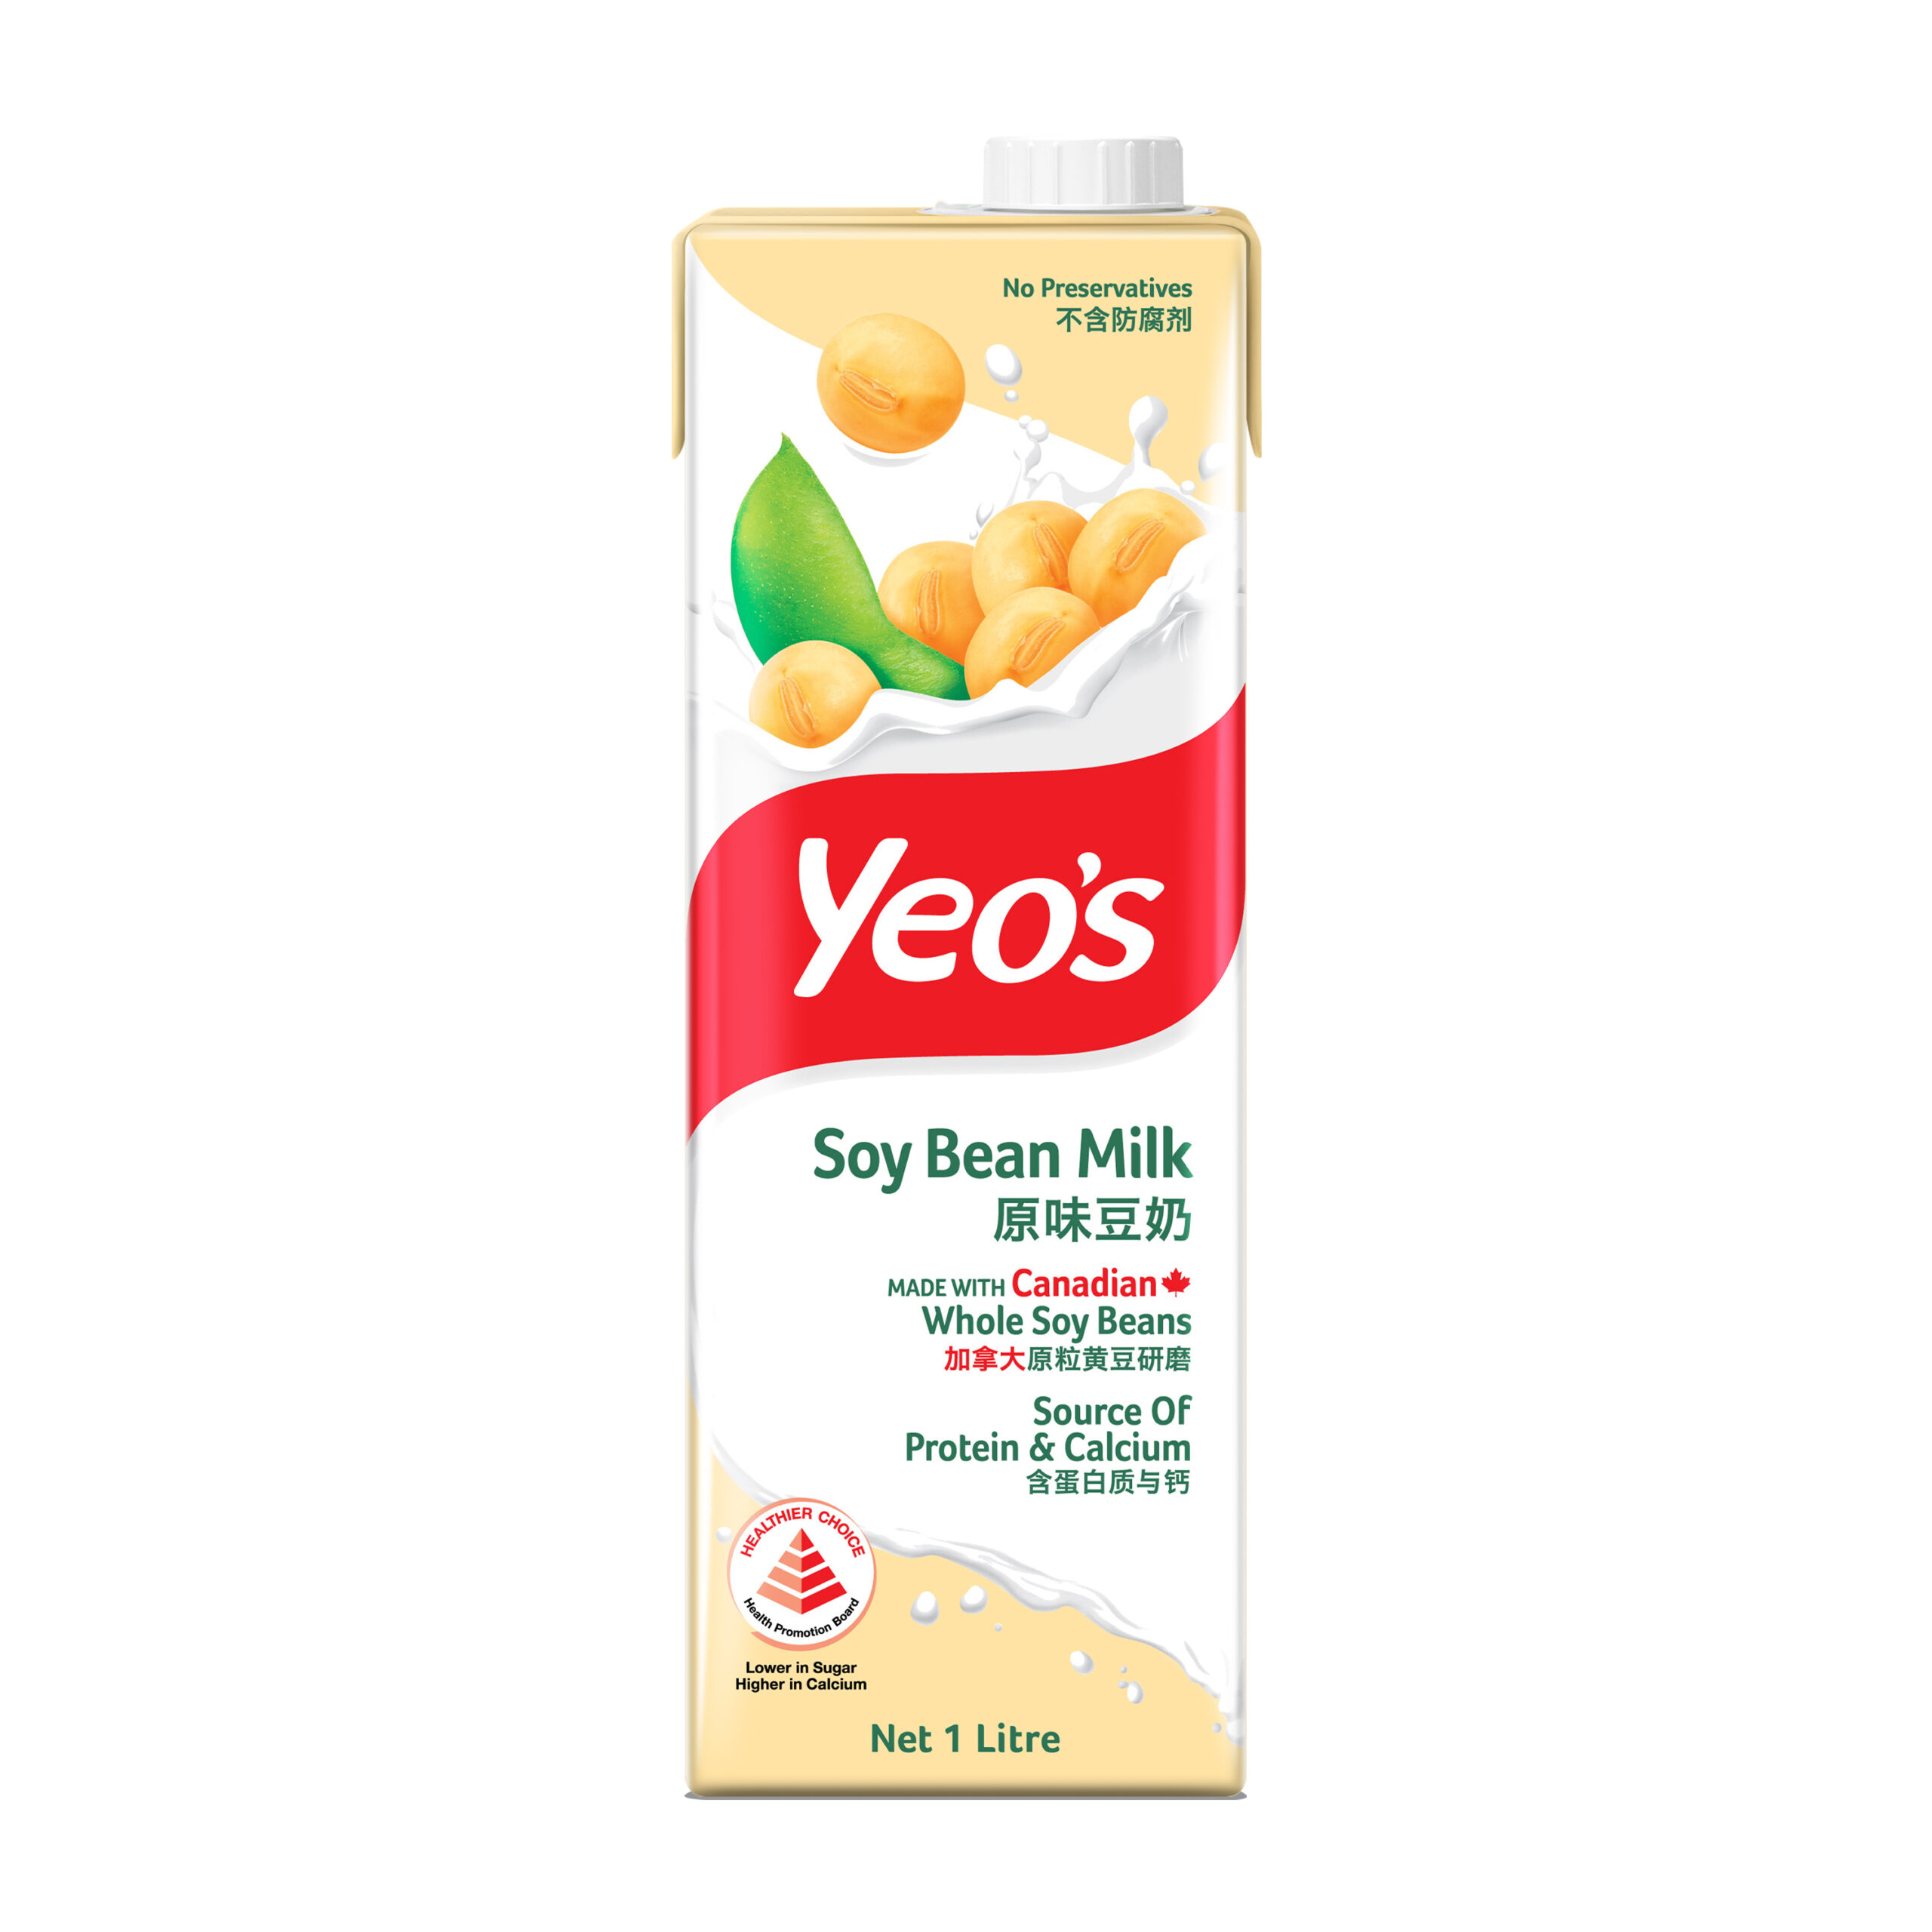 Yeo's 1 Liter Soy Milk